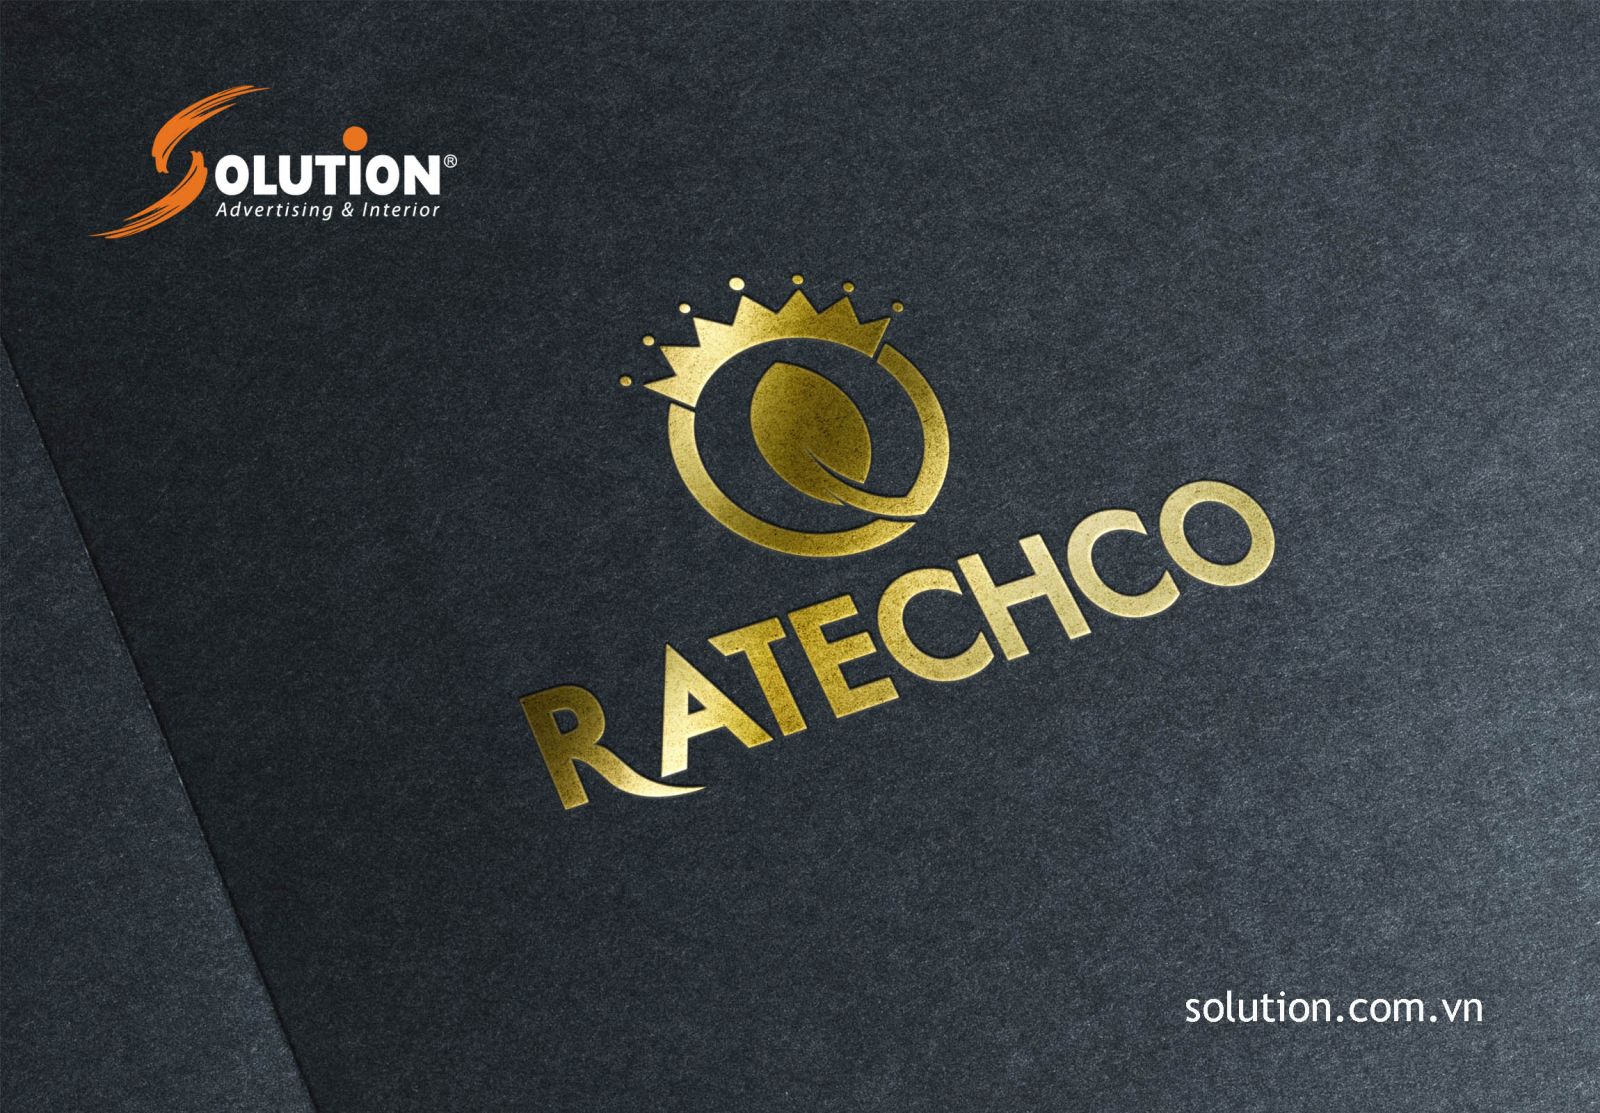 thiet-ke-logo-ratechco-1